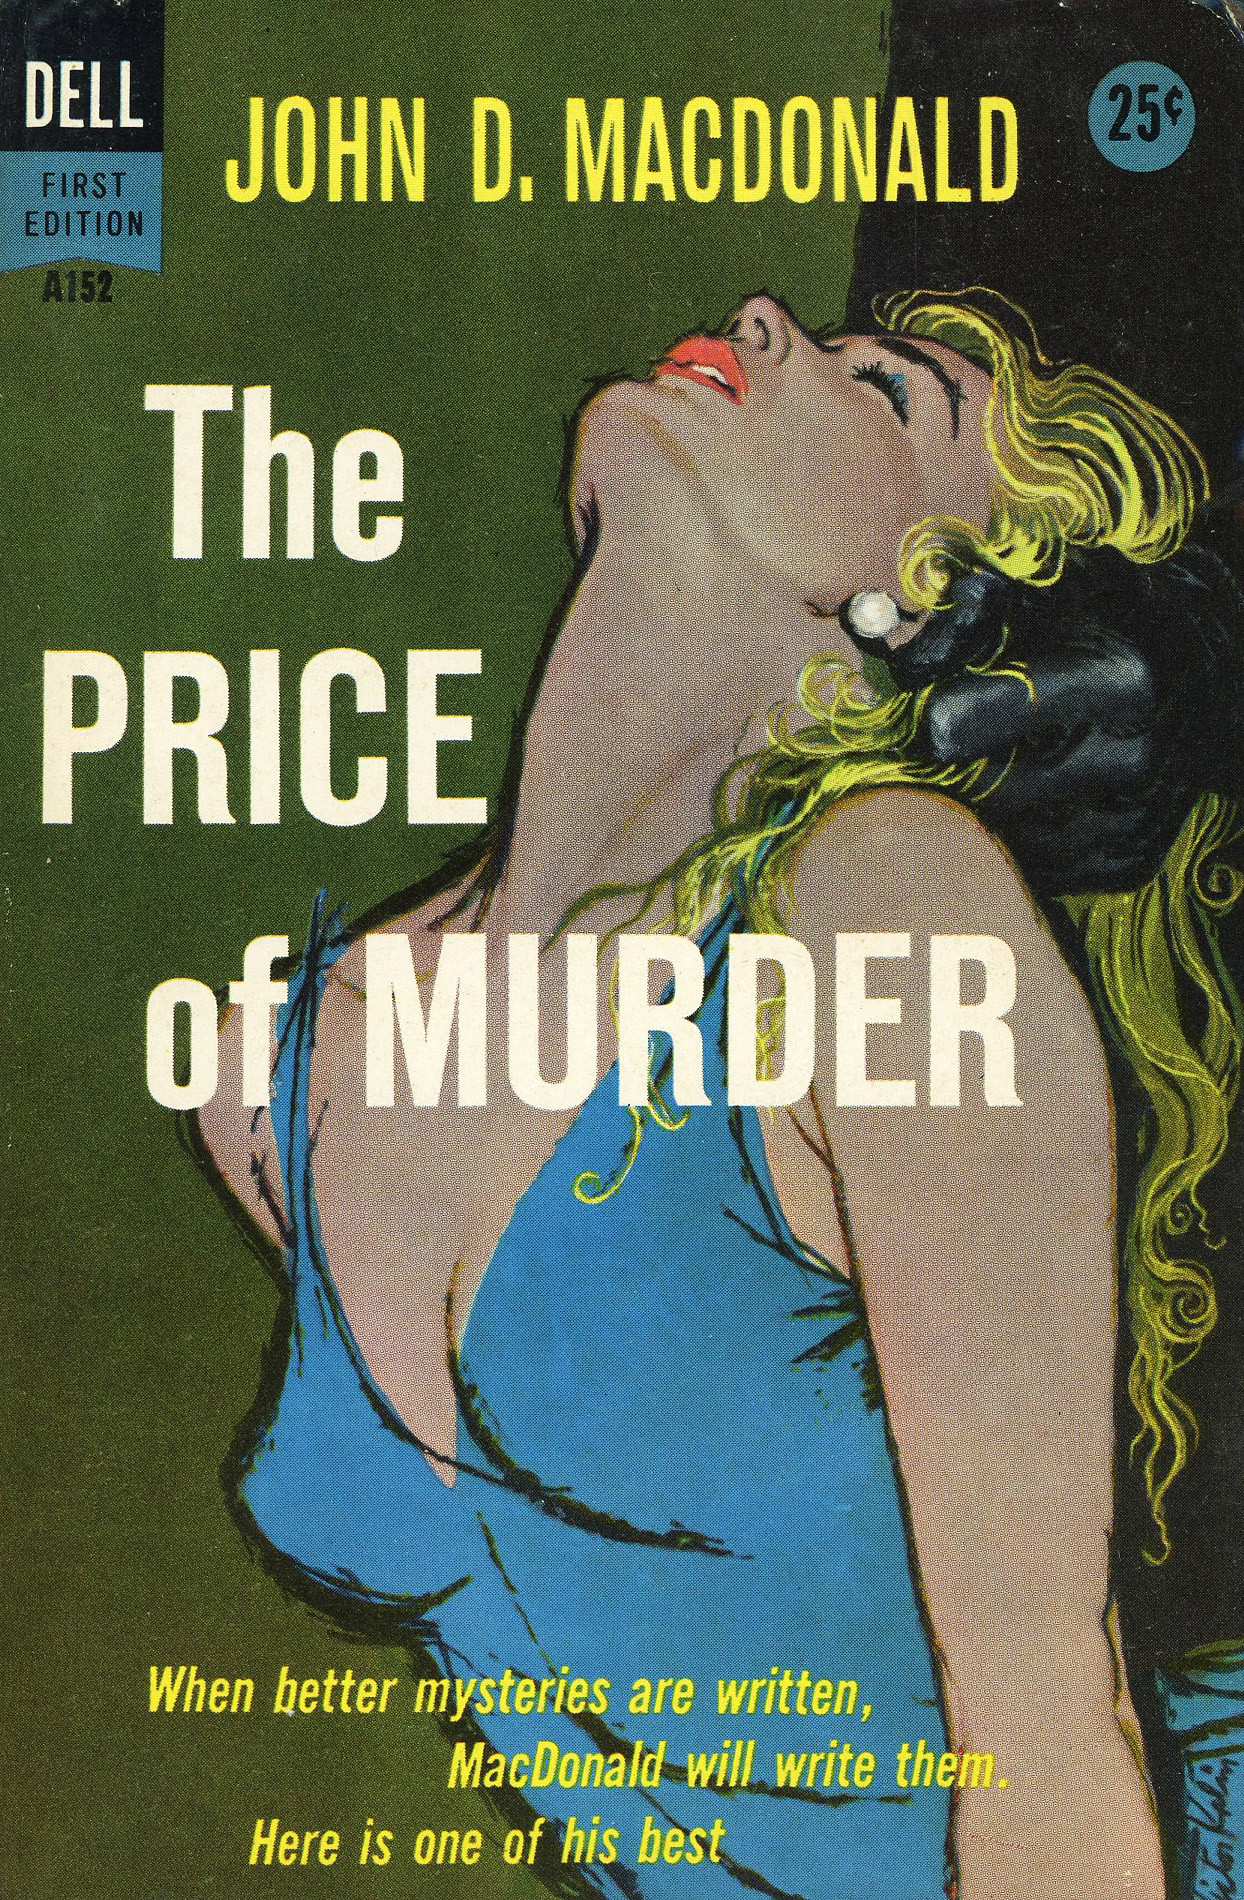 8386874190-dell-books-a152-john-d-macdonald-the-price-of-murder